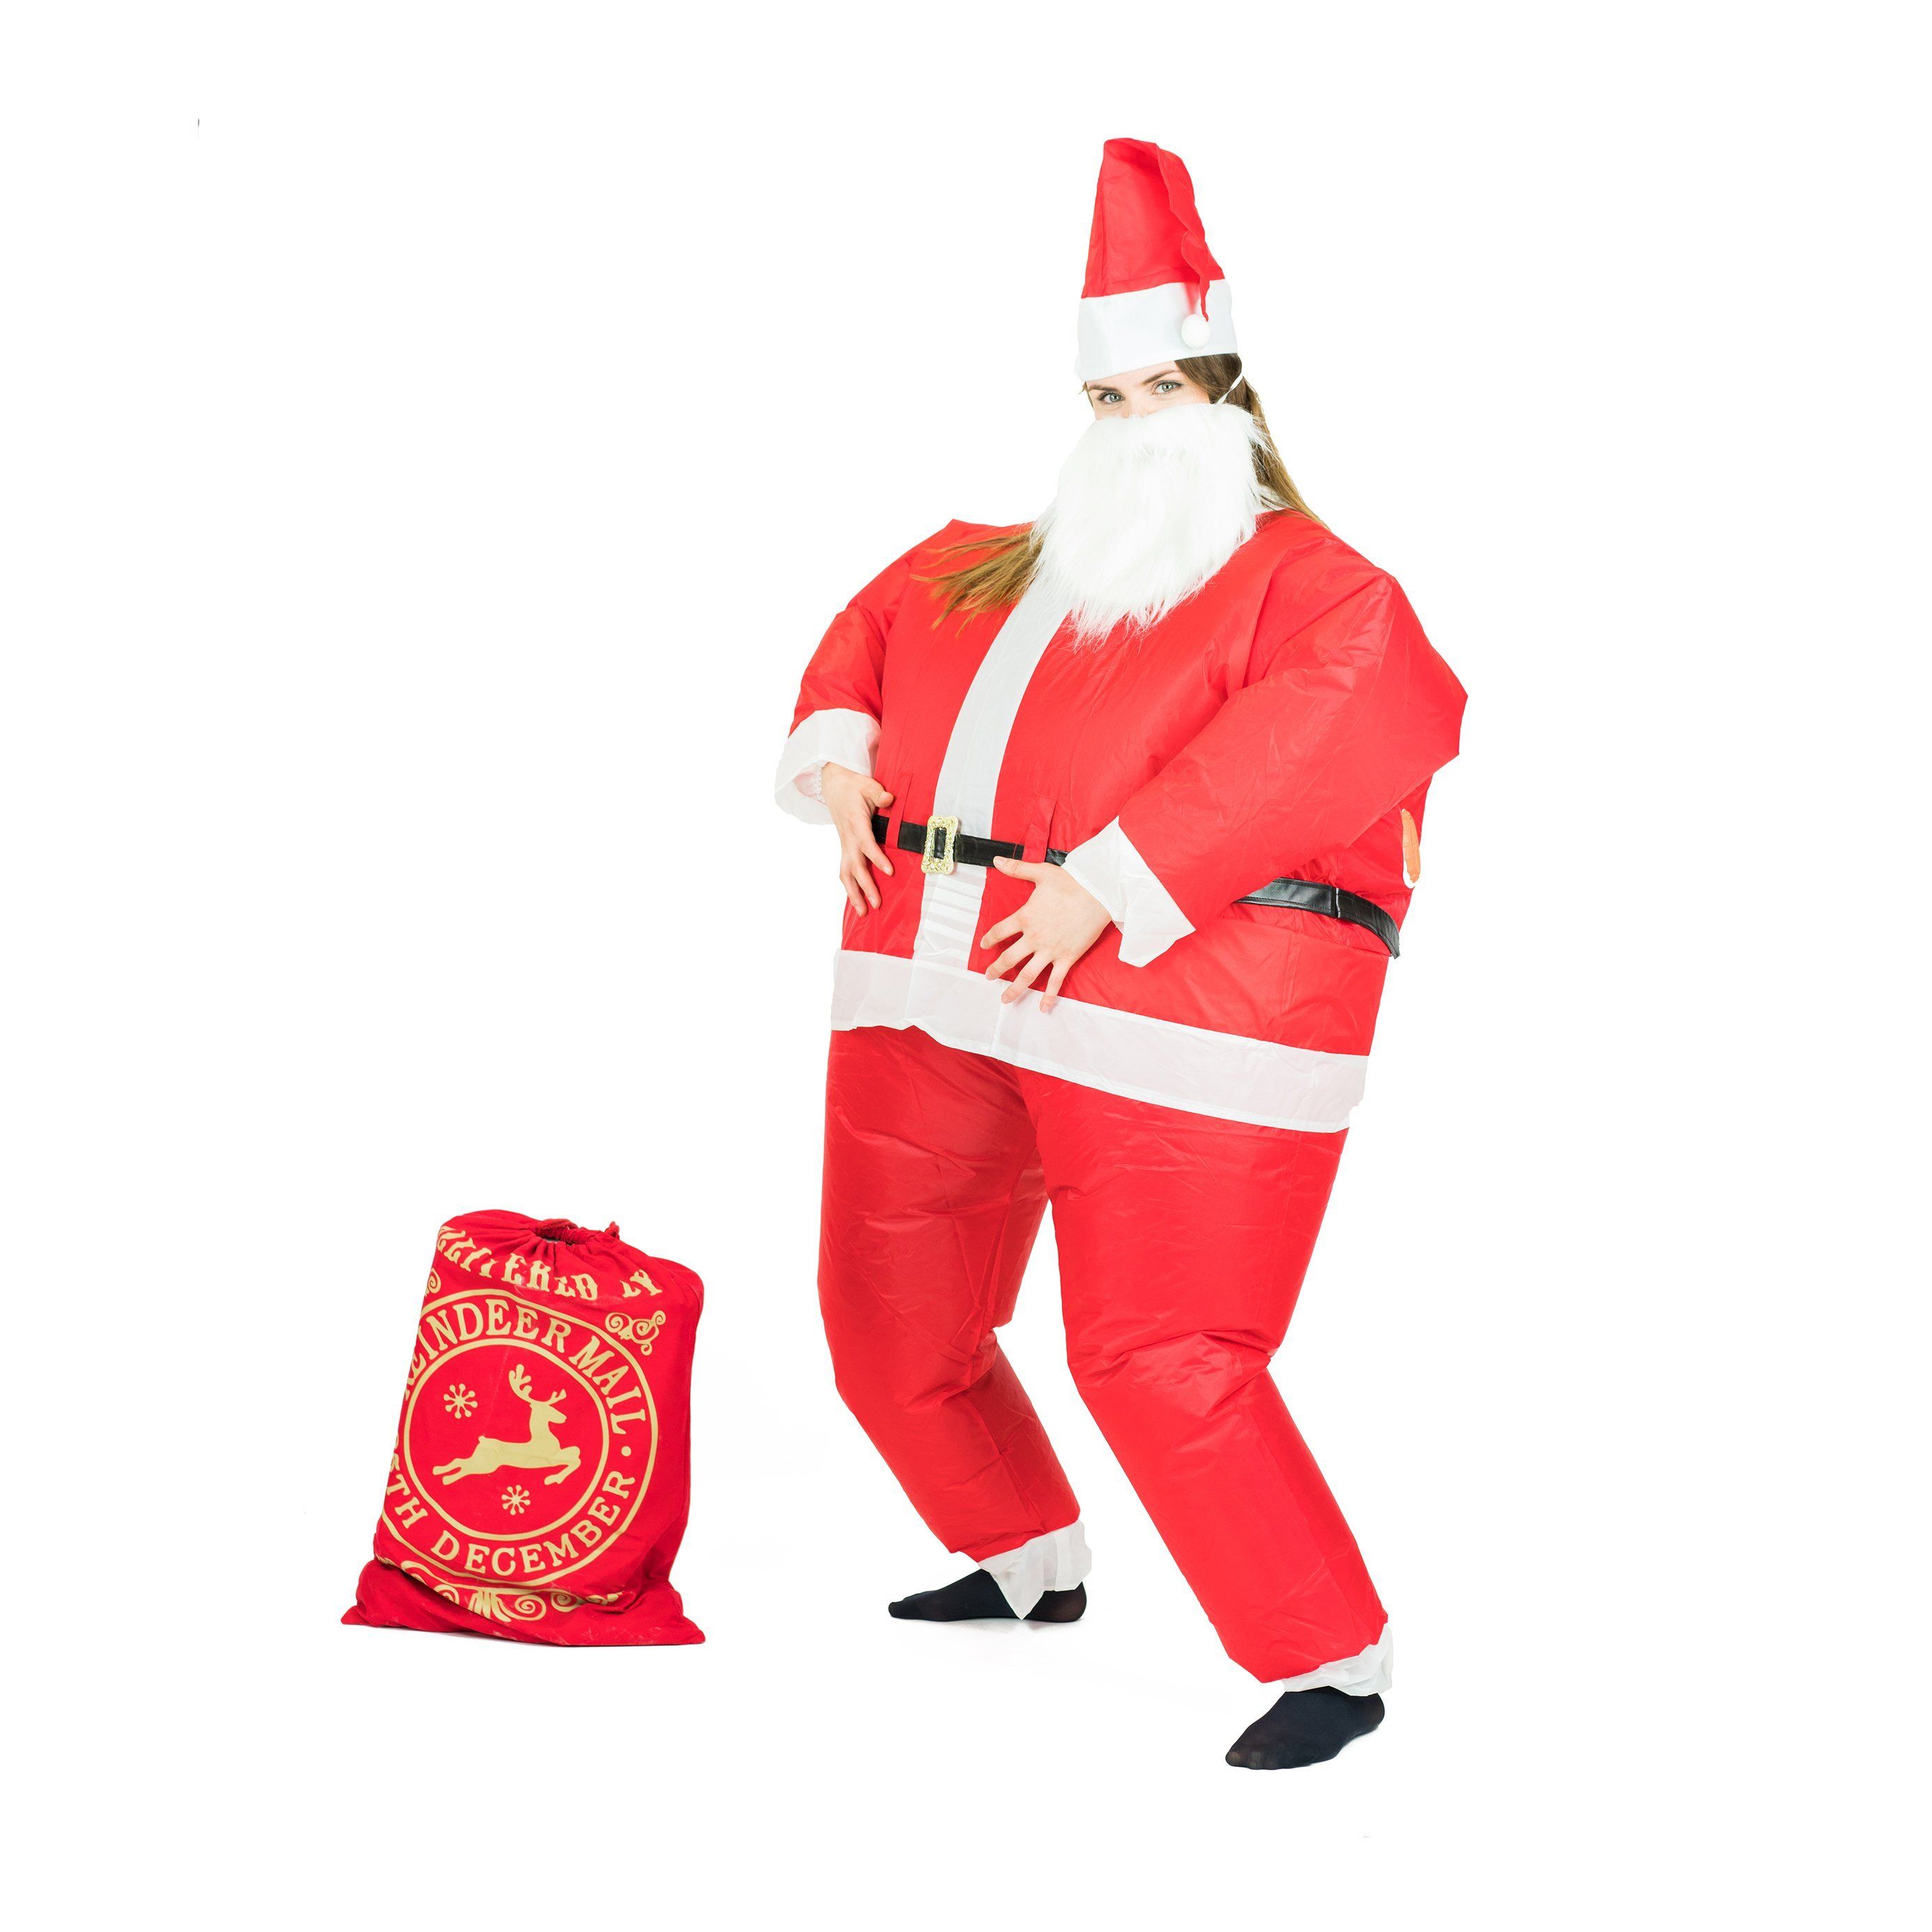 Fancy Dress - Inflatable Santa Costume